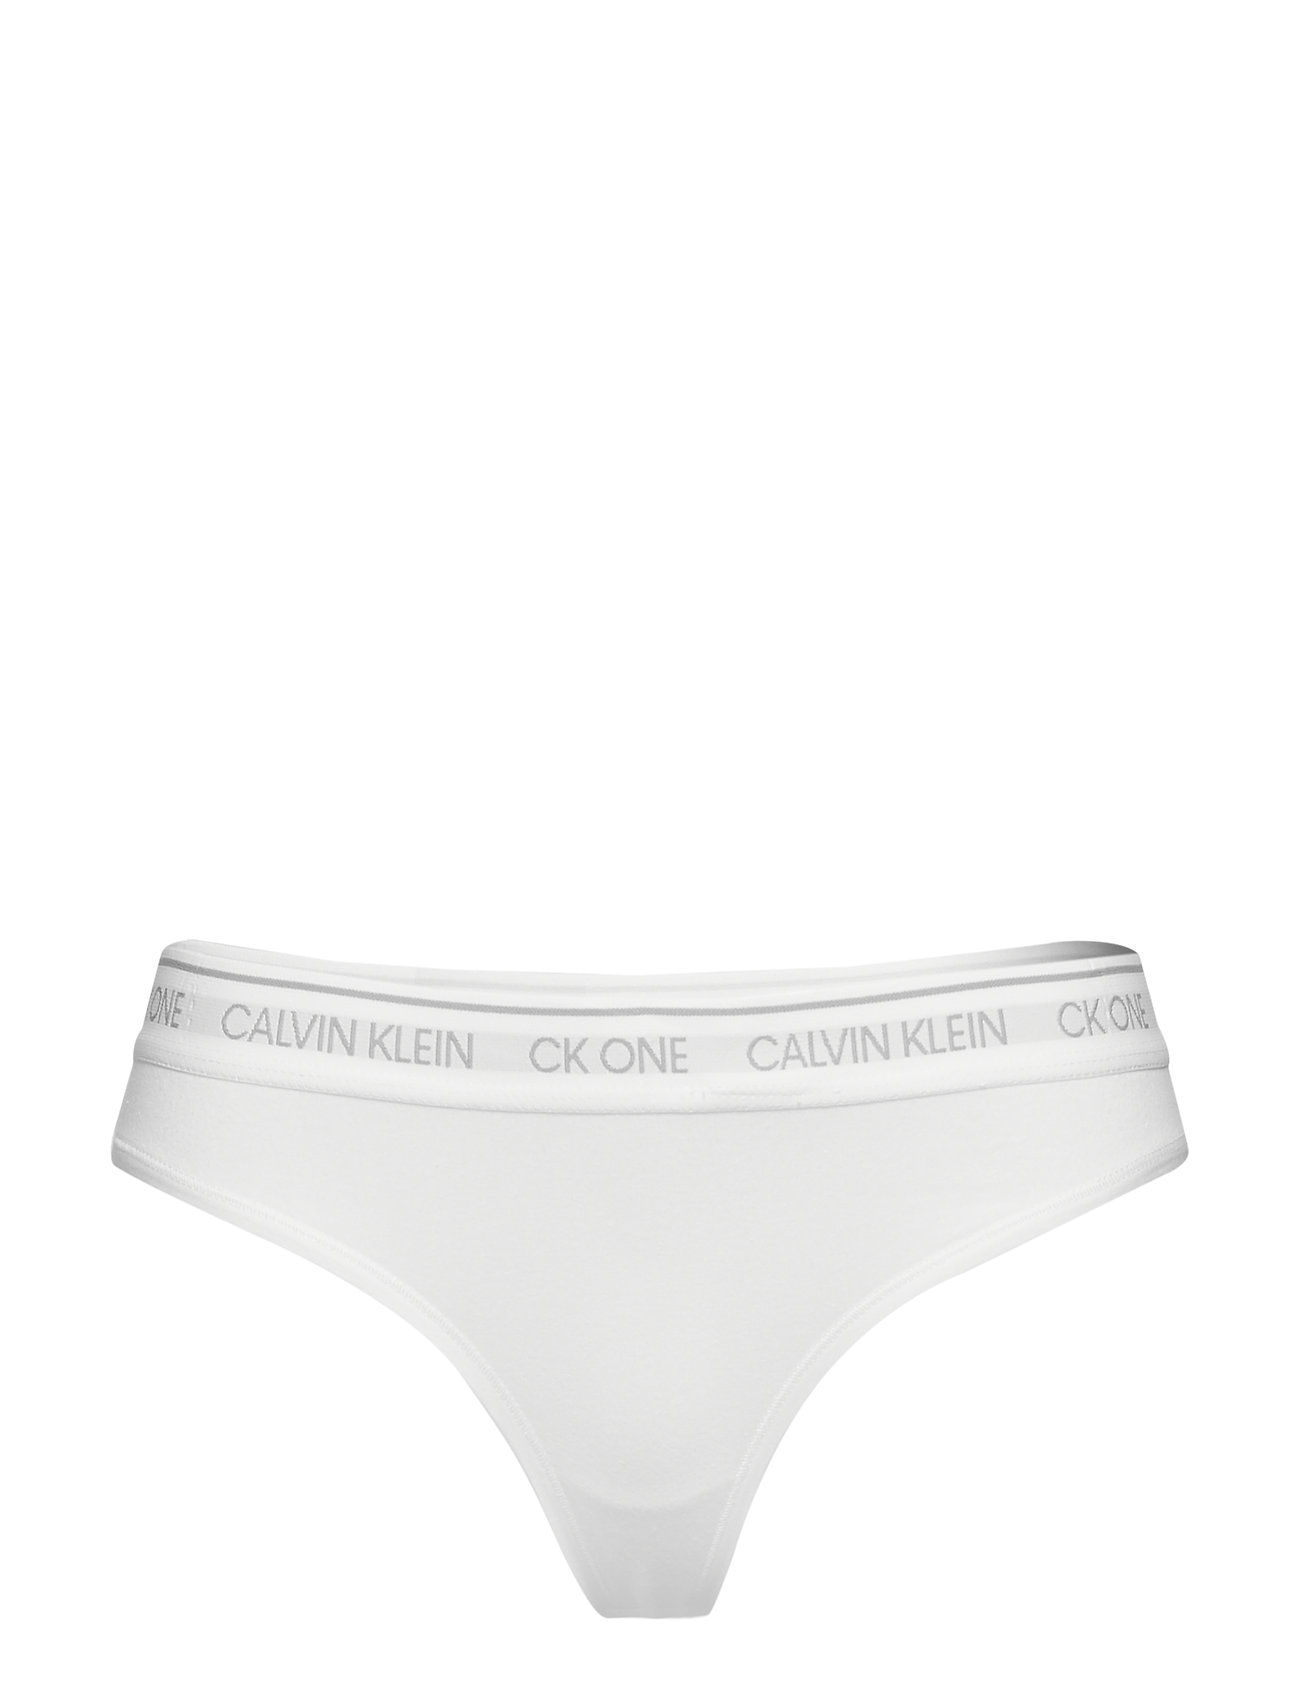 calvin klein white thong